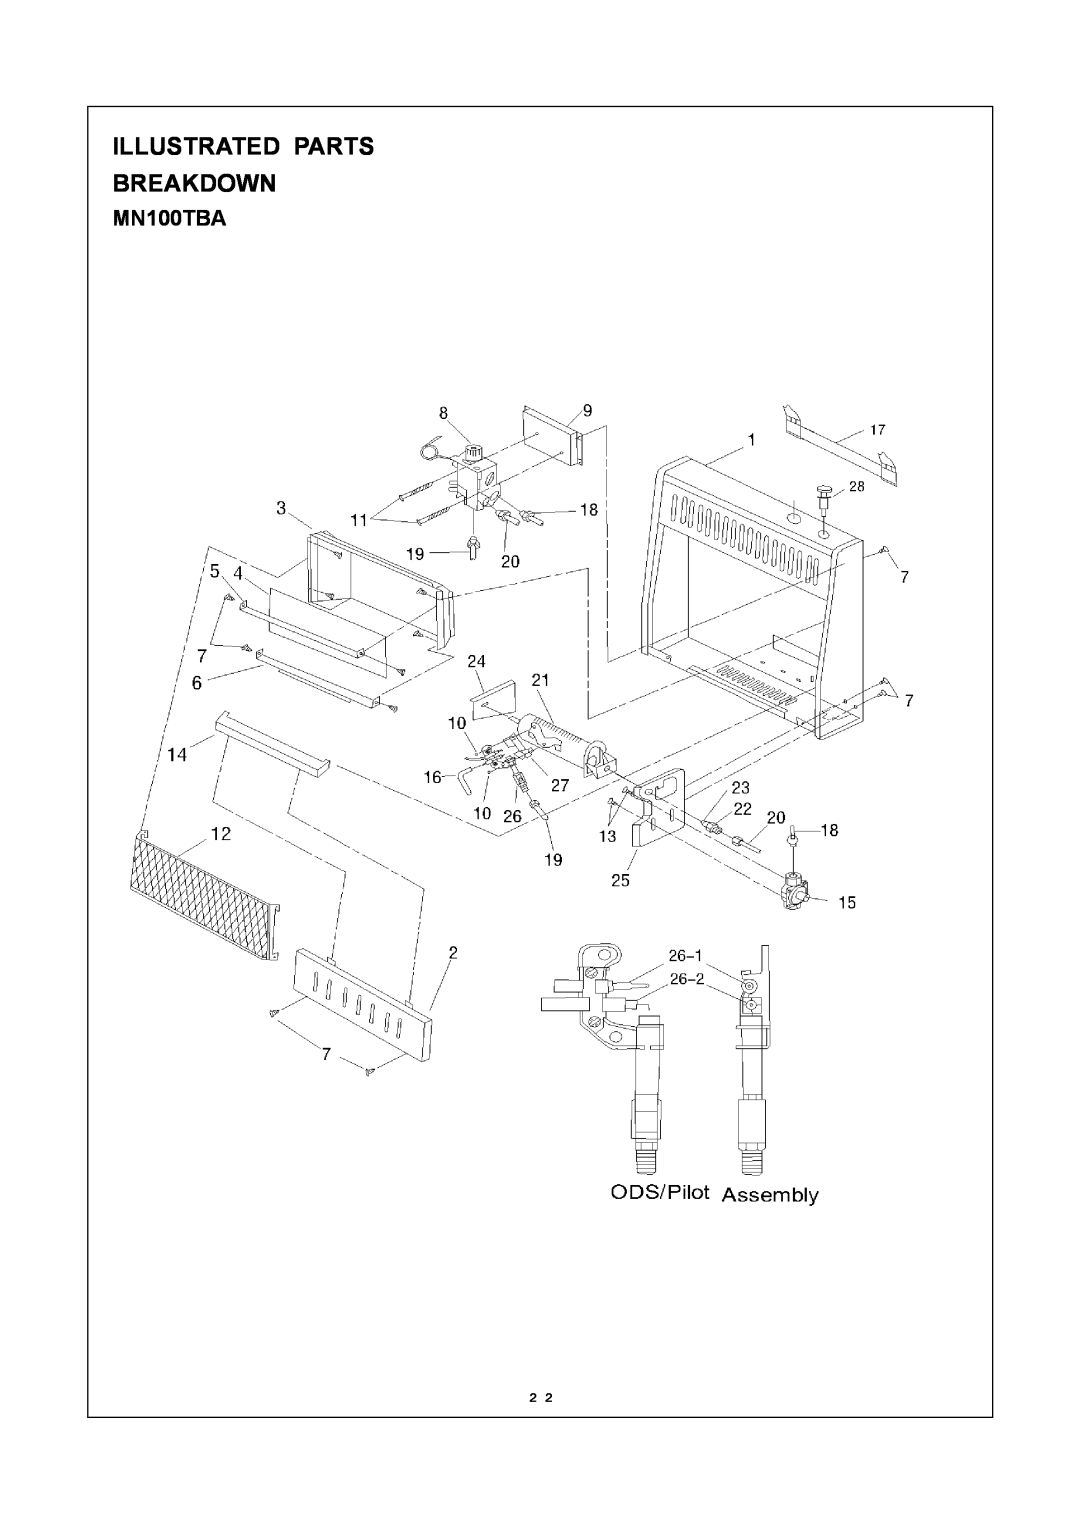 Procom MN060HBA, MN100HBA installation manual MN100TBA, Illustrated Parts Breakdown 